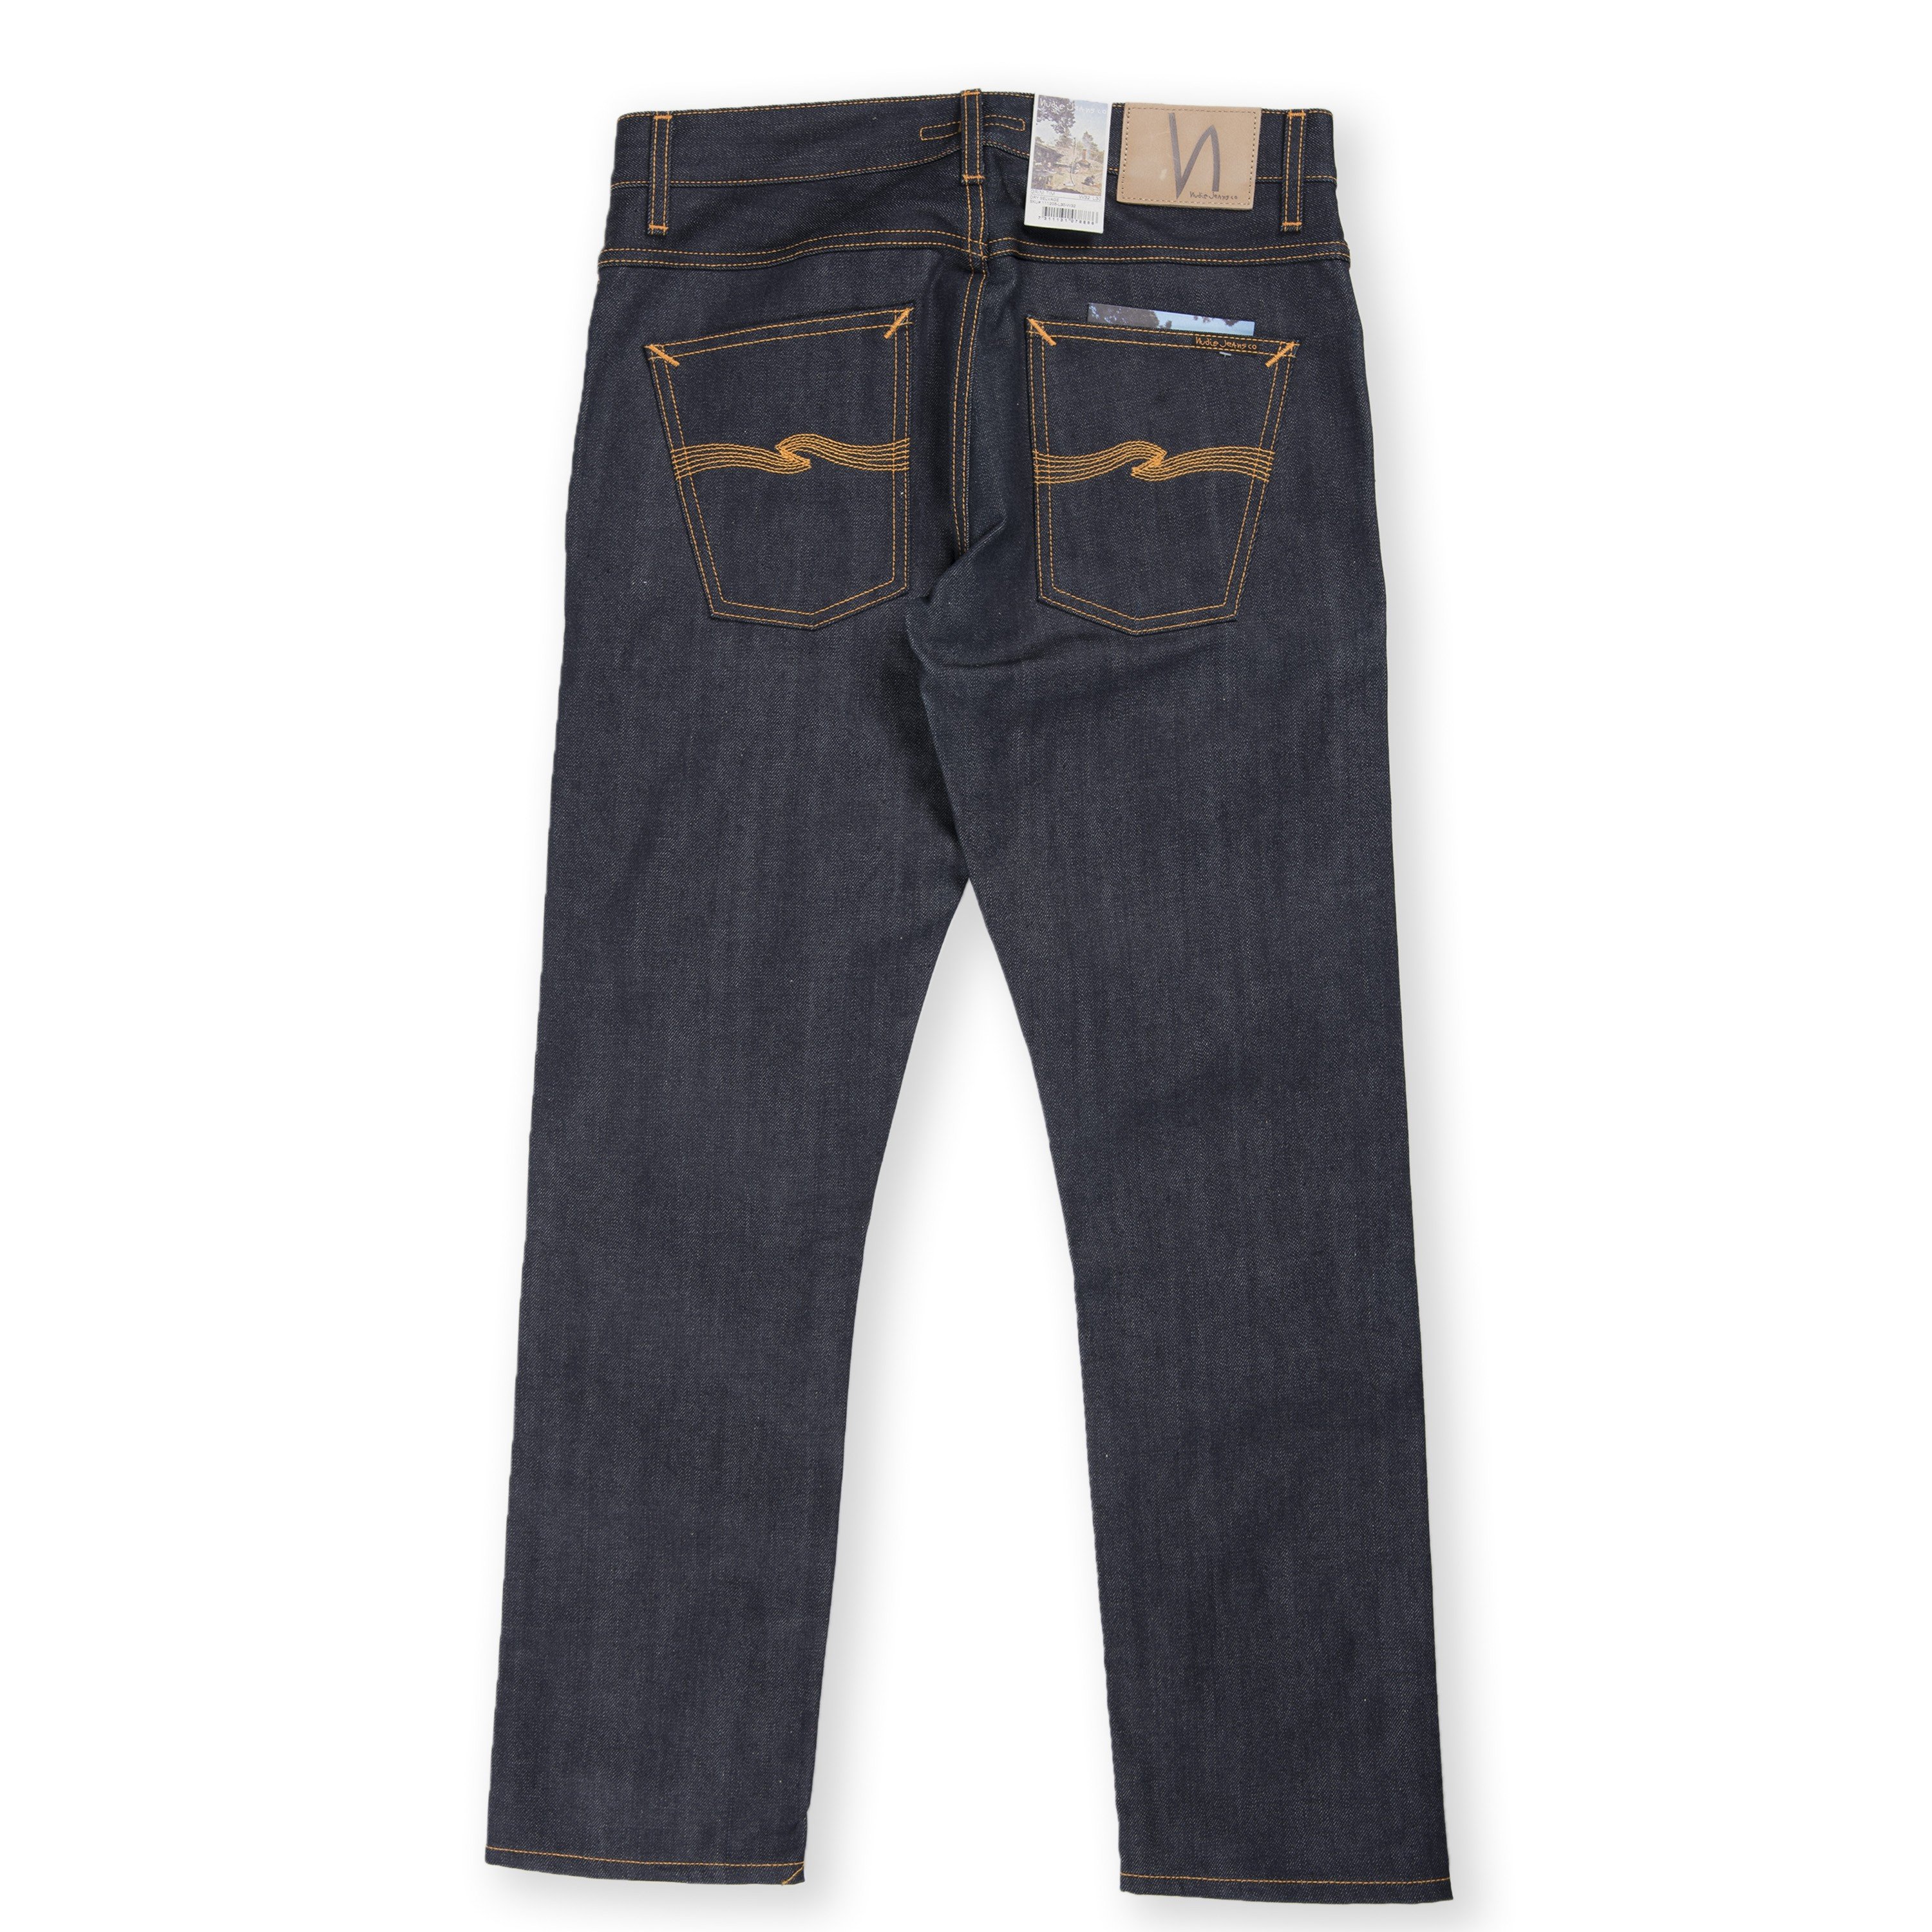 Nudie Jeans Grim Tim Denim Jeans (Dry Selvage) - Consortium.